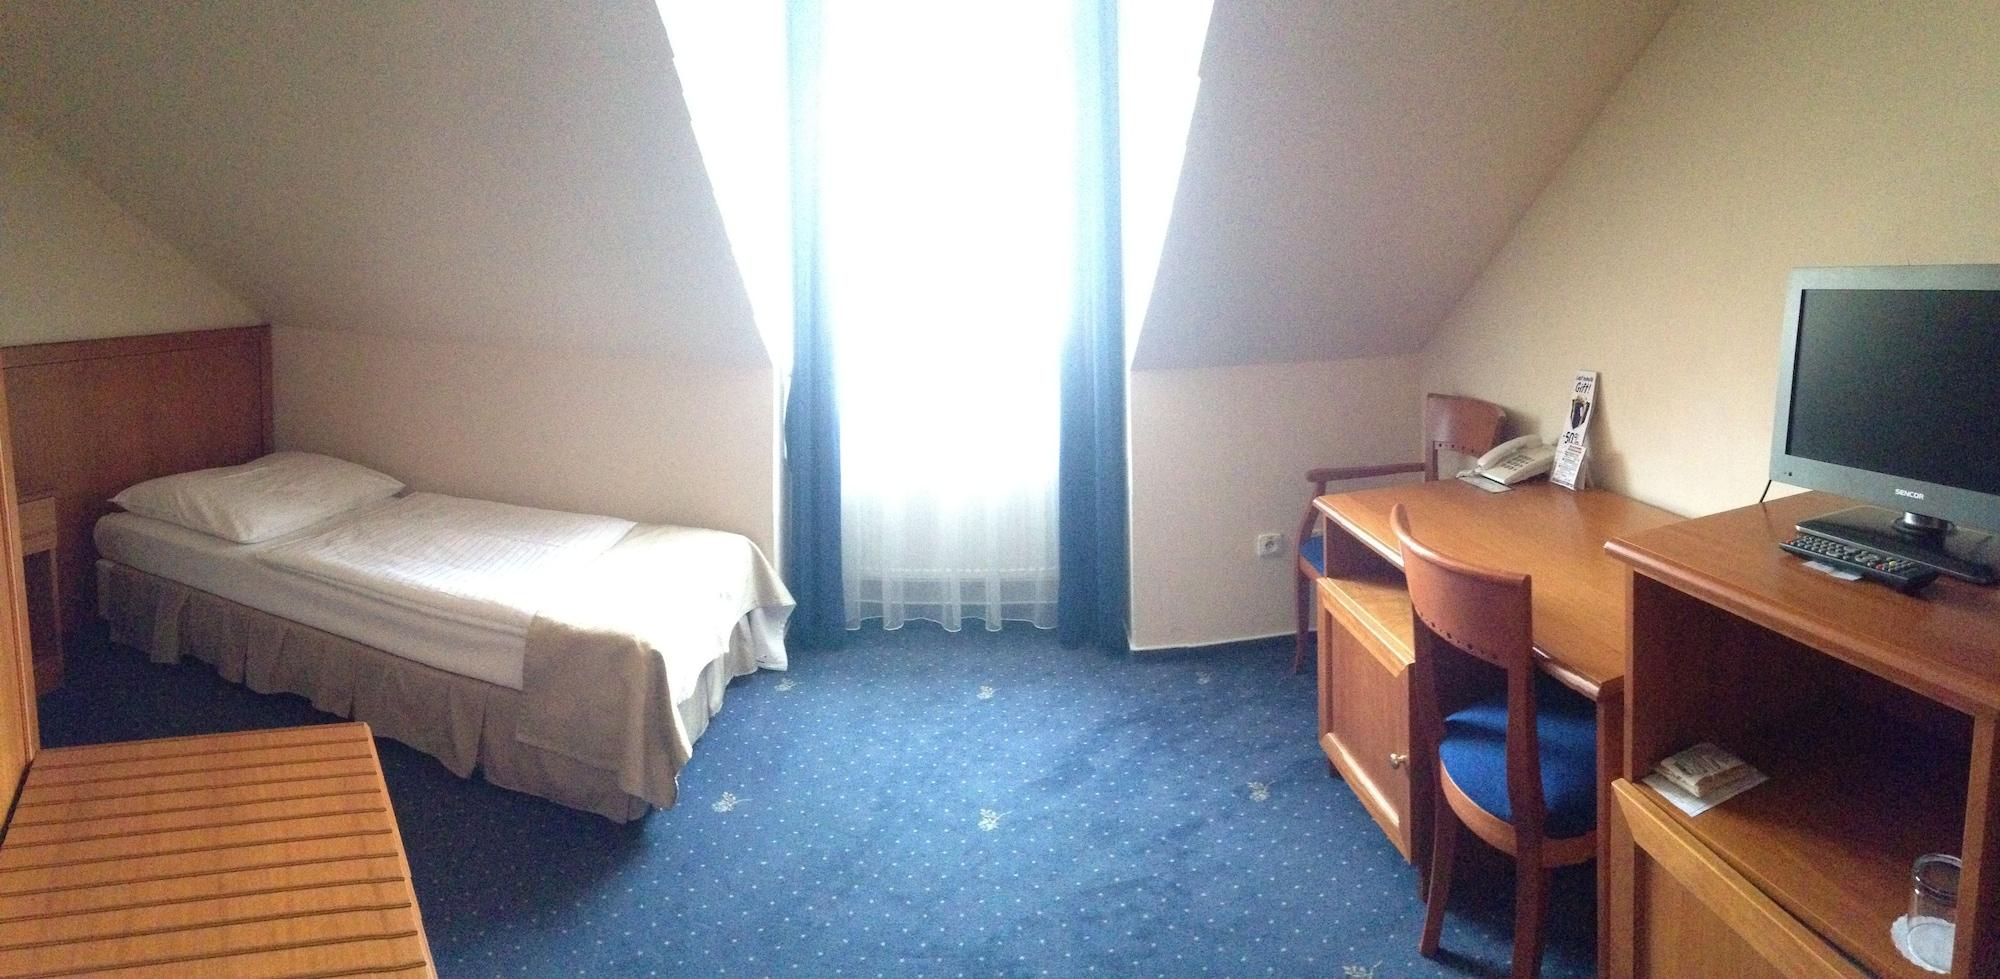 Hotel Modra Ruze Прага Экстерьер фото